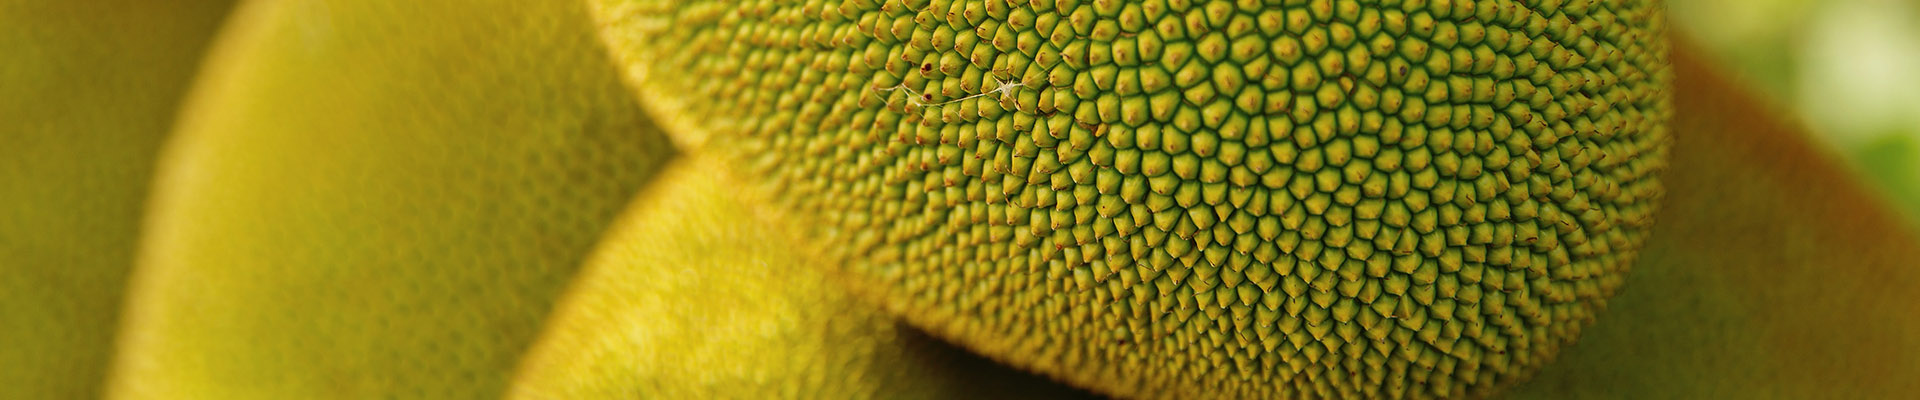 Durian has a yellowish-spiky skin.